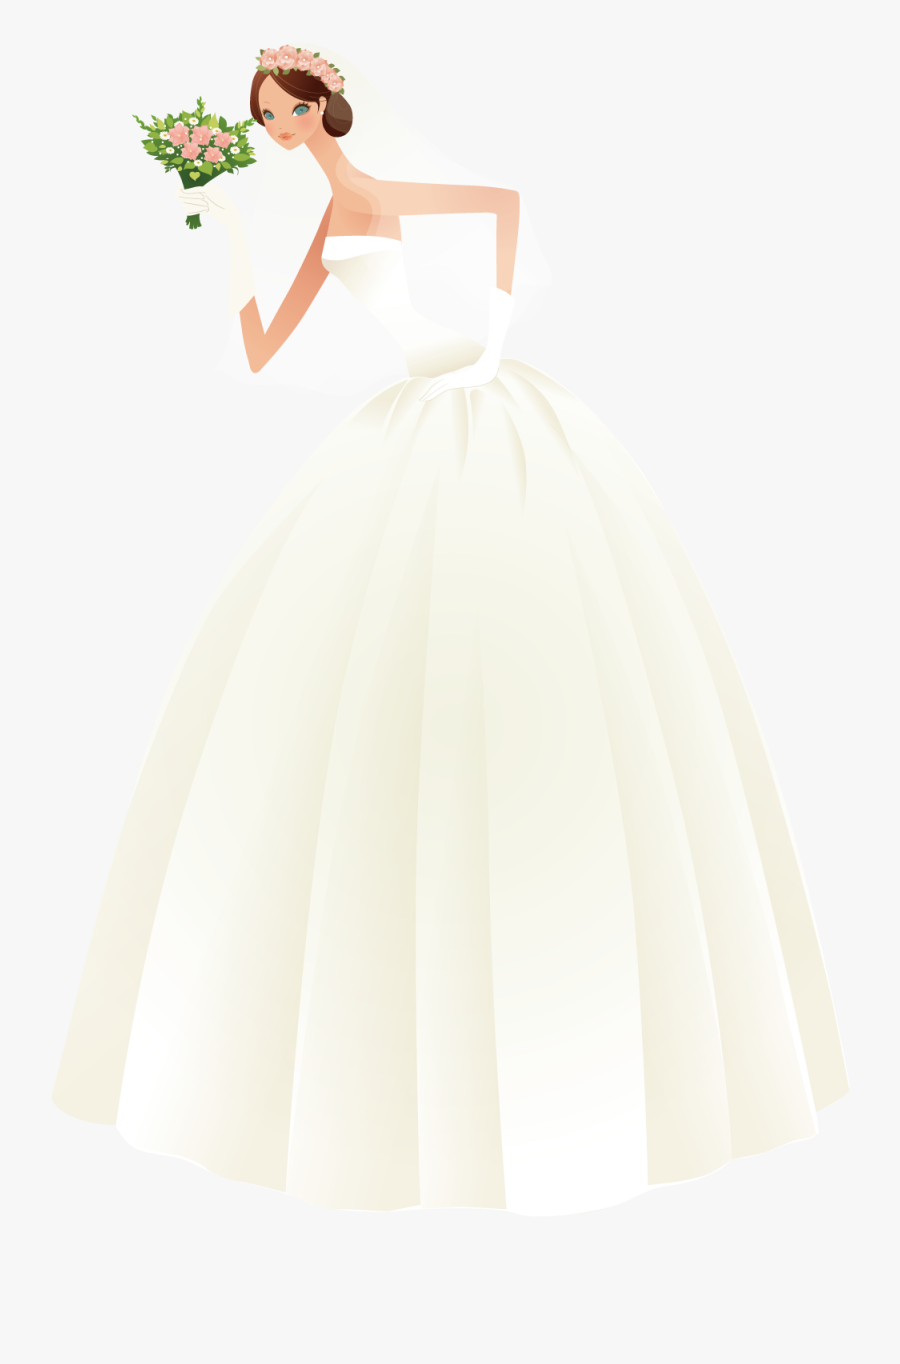 Bride Dress Png - Bride , Free Transparent Clipart - ClipartKey